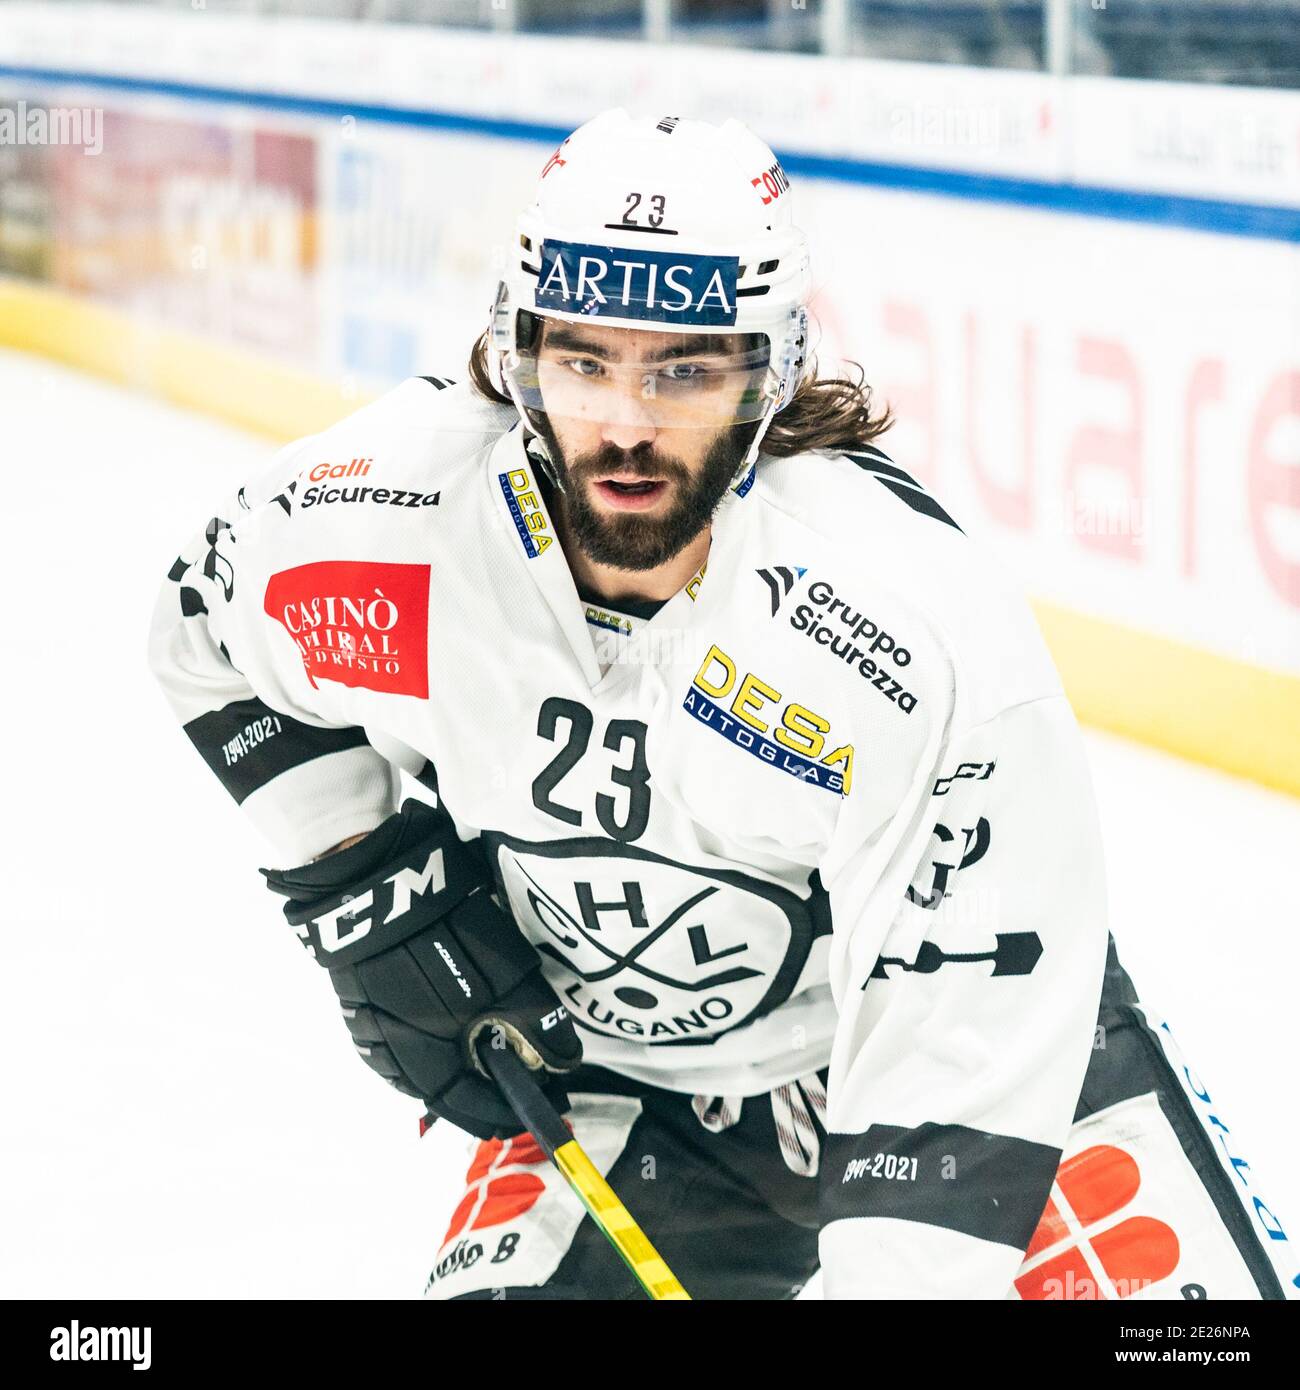 January 12th, 2021, Zurich, Hallenstadion, National League ZSC Lions - HC Lugano, # 23 Giovanni Morini (Lugano) Credit SPP Sport Press Photo